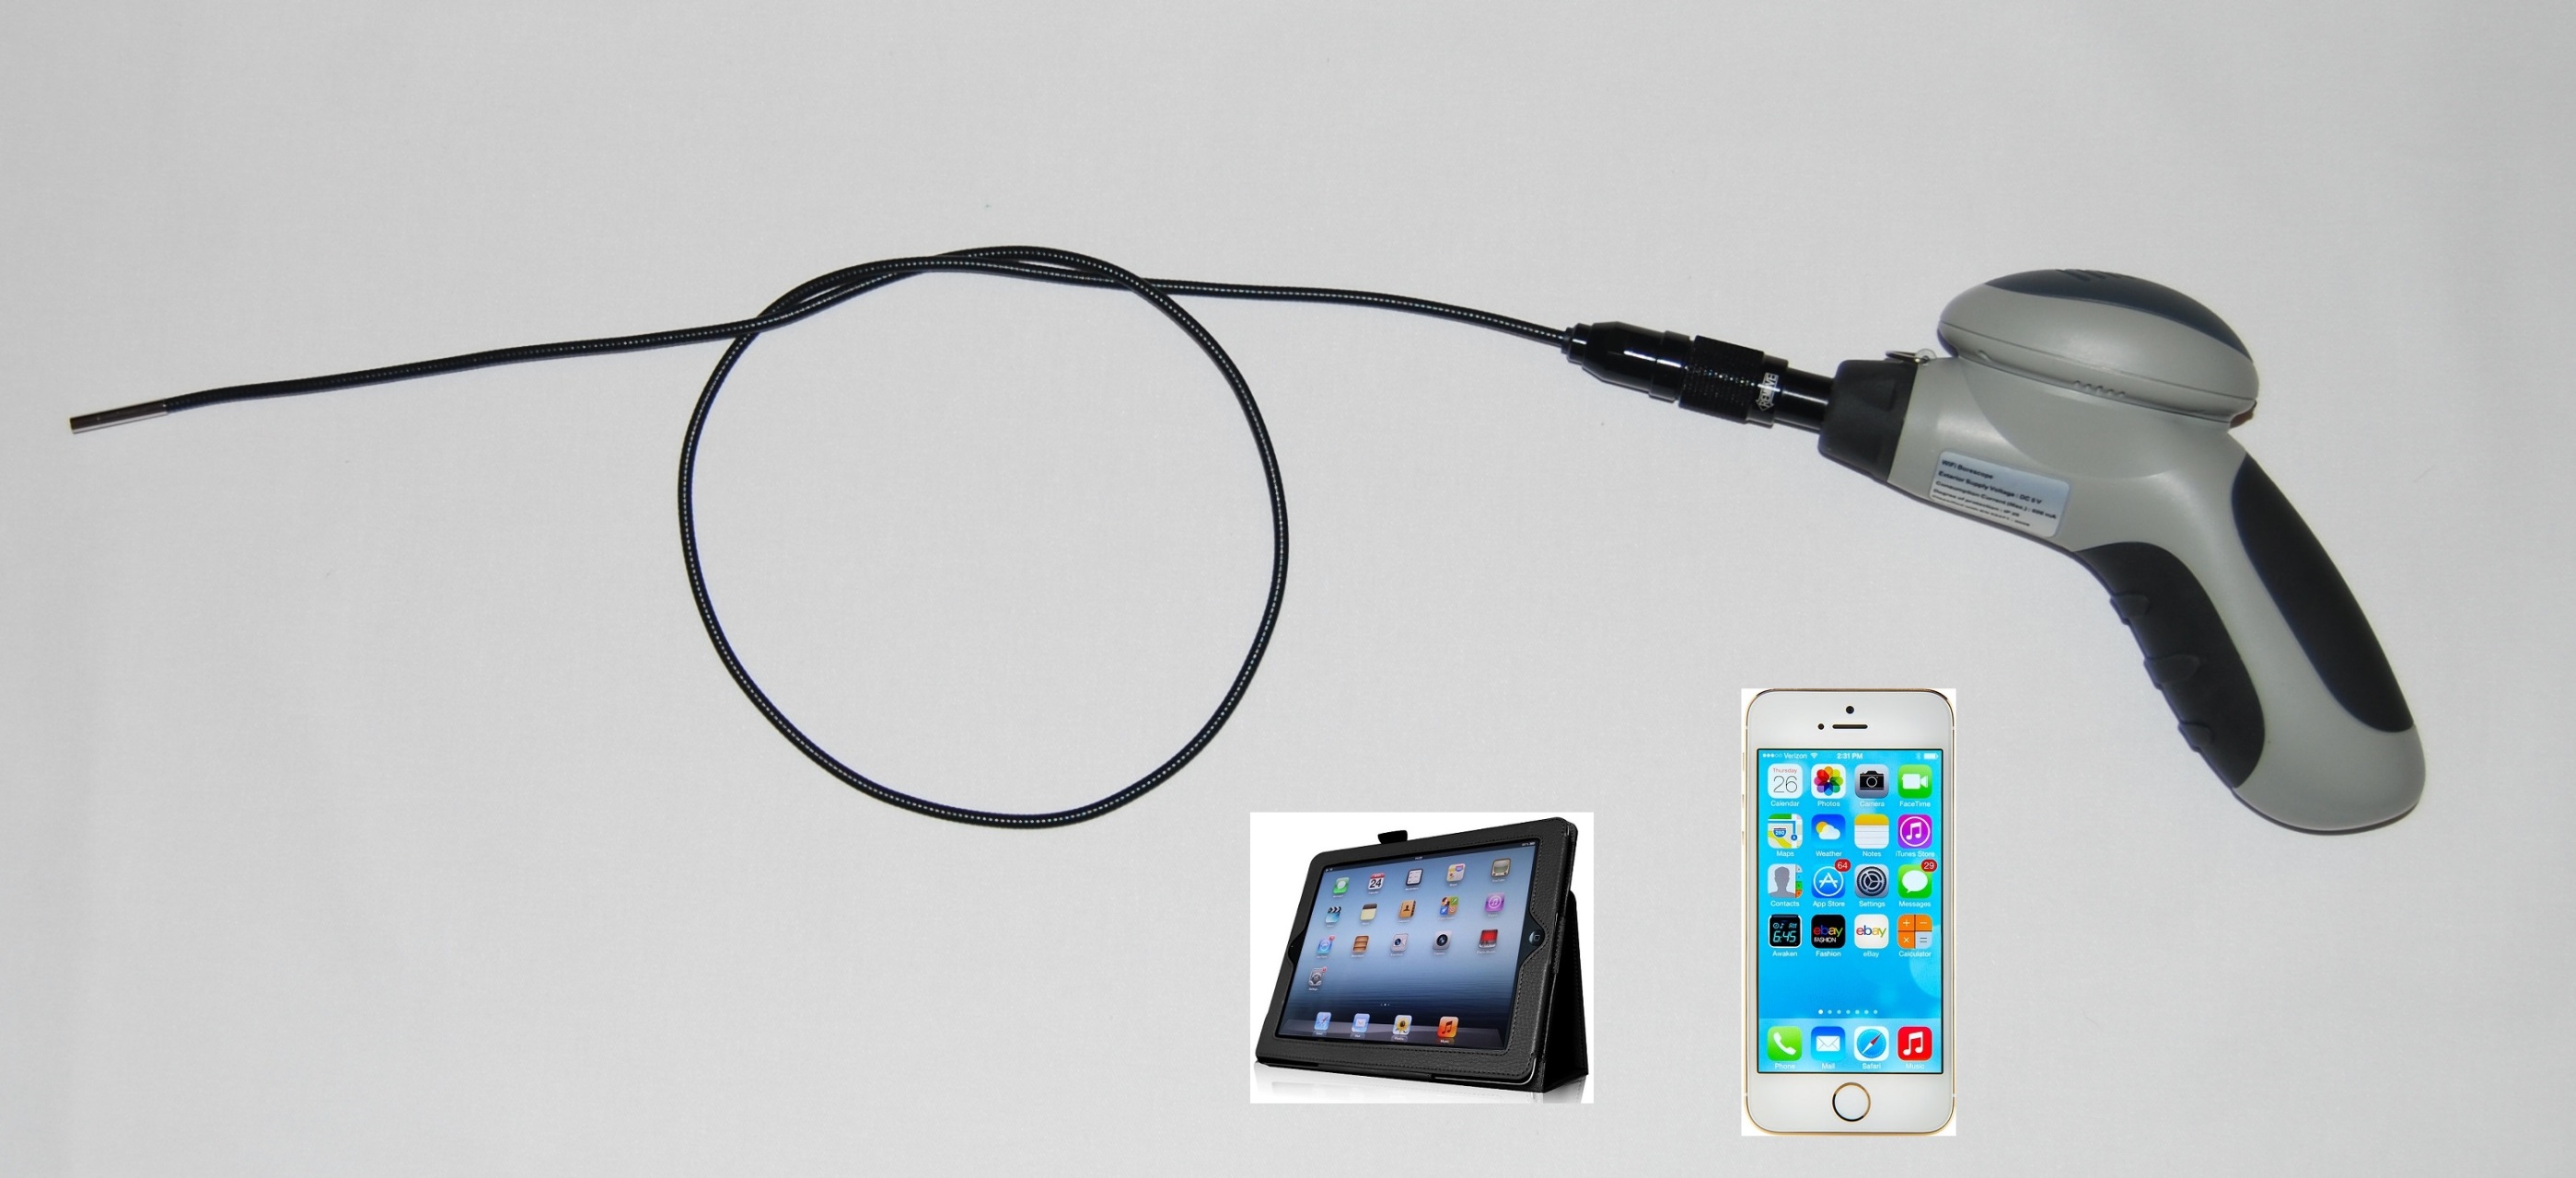 Cyberruimte Aja merk 3.9mm Flexible Inspection Camera for iPhone/Android - Oasis Scientific Inc.